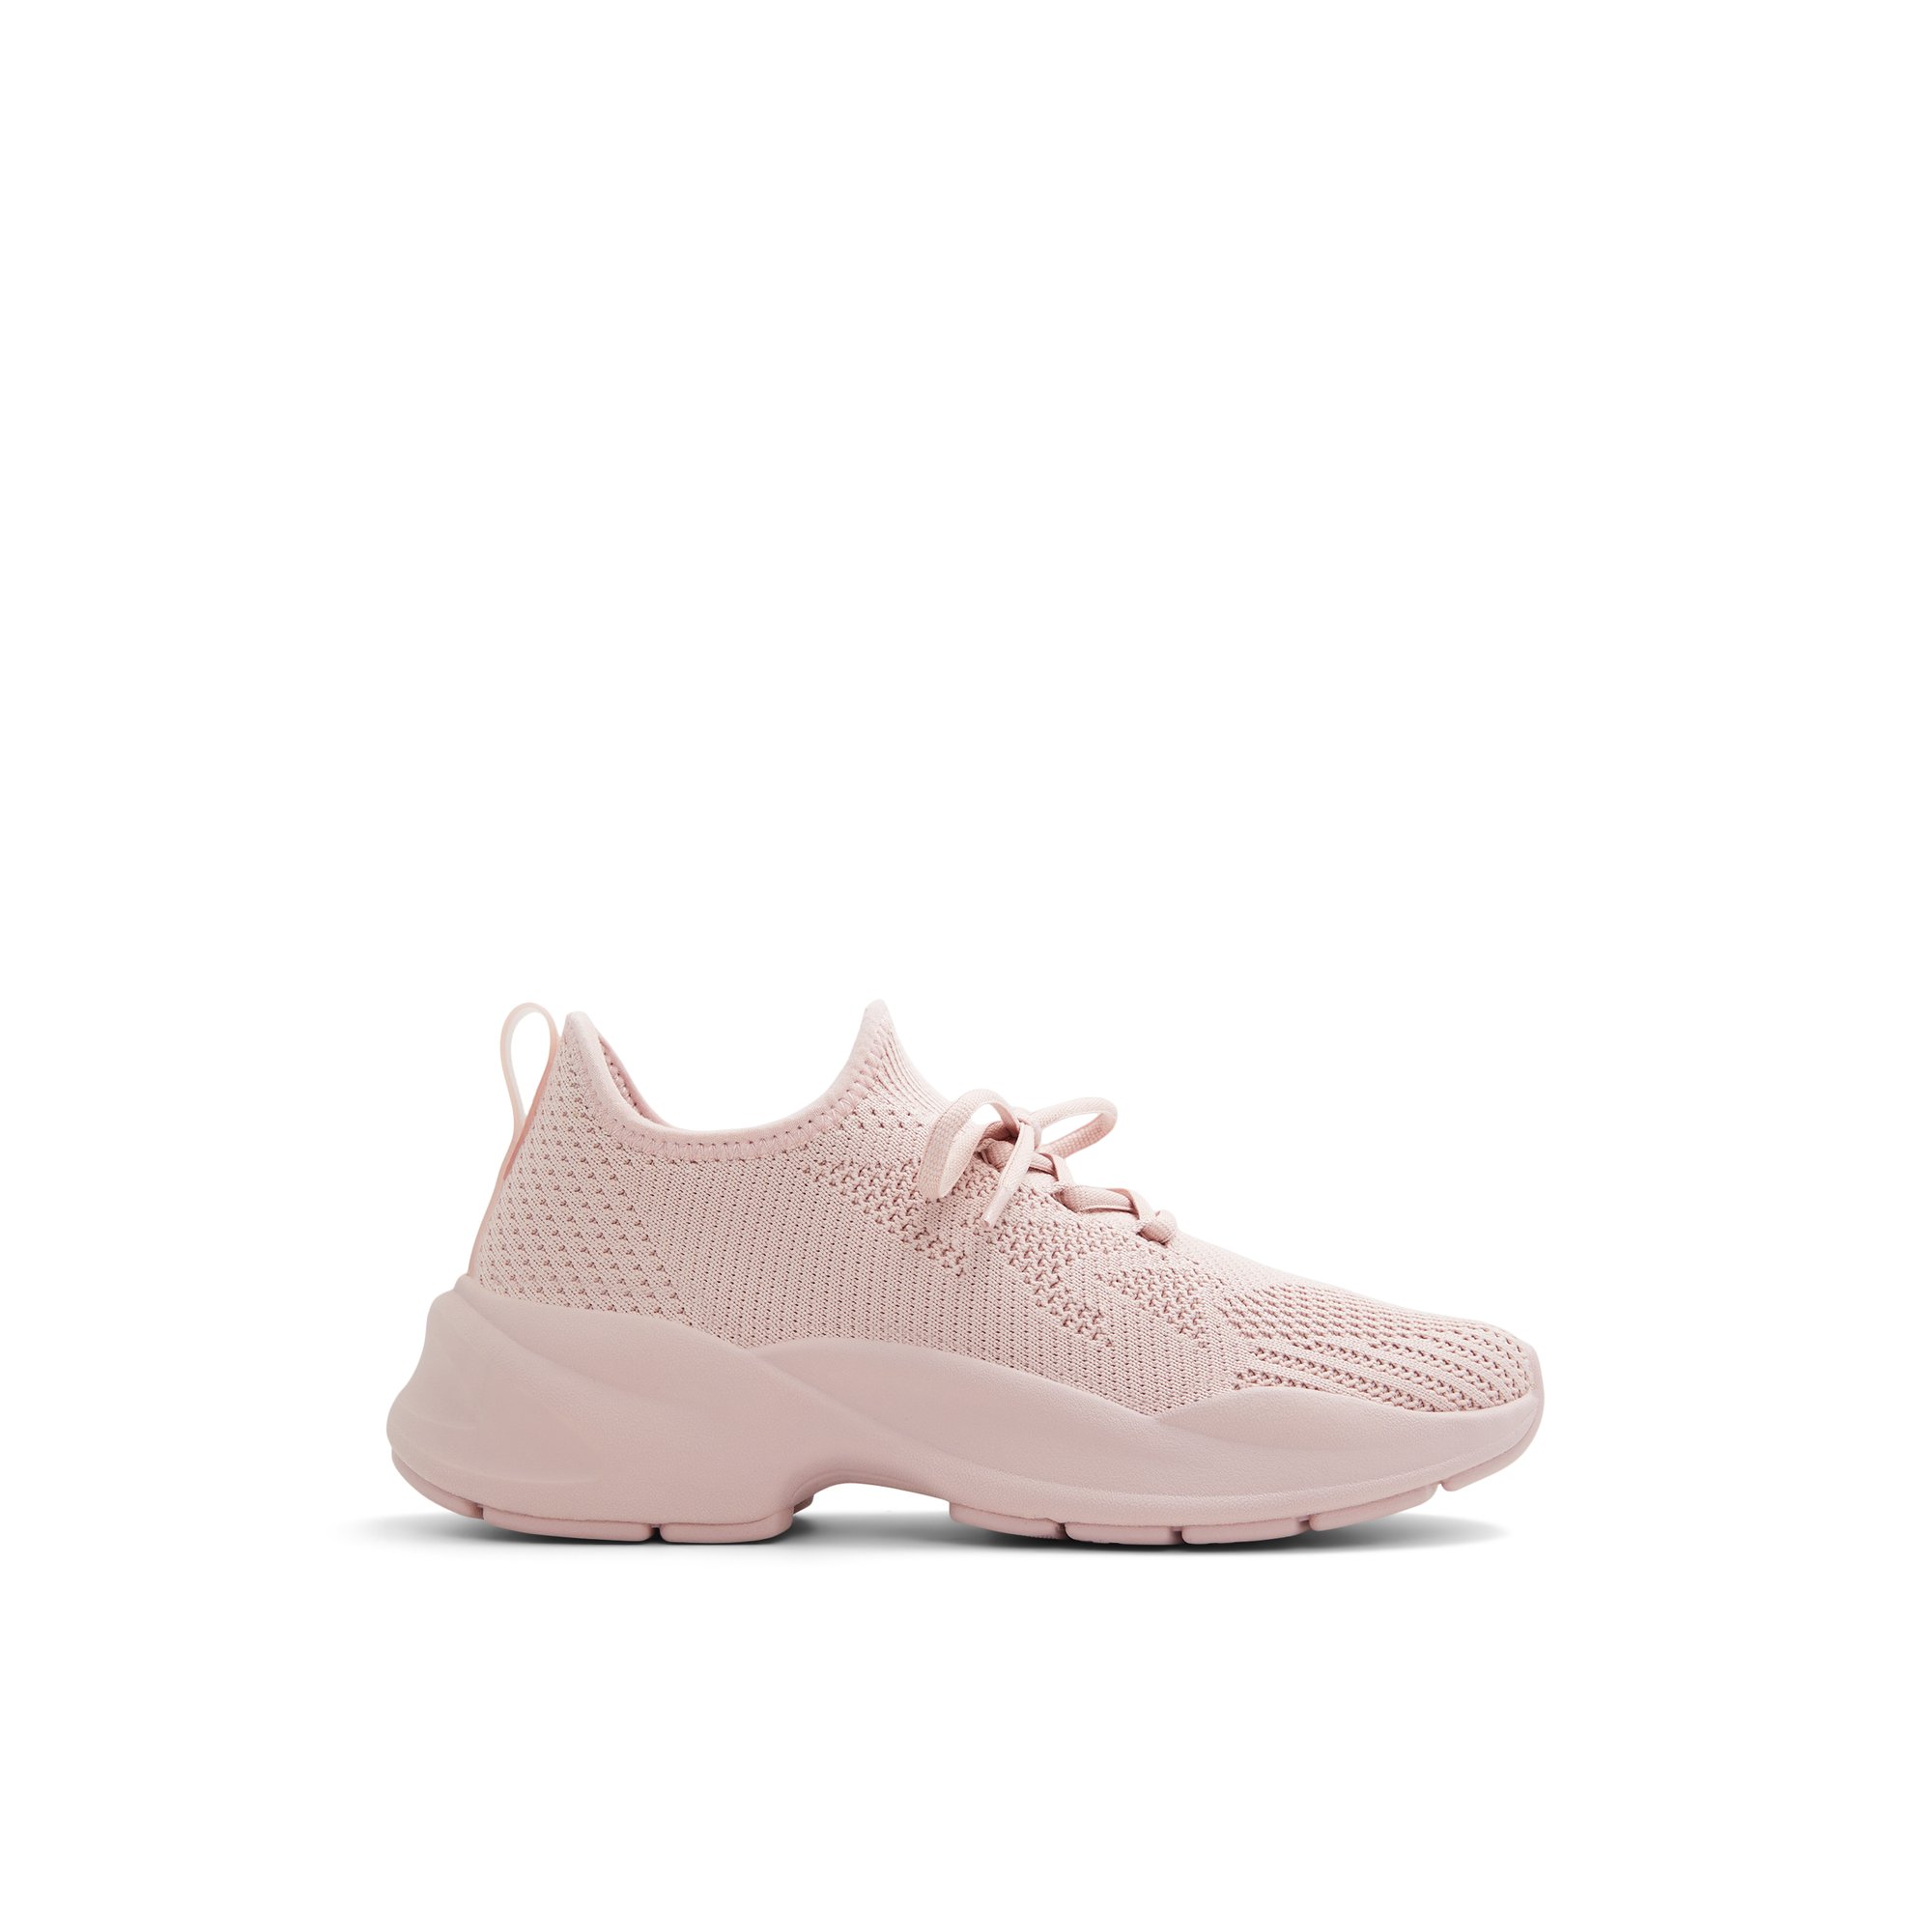 ALDO Allday - Women's Sneakers Athletic - Pink